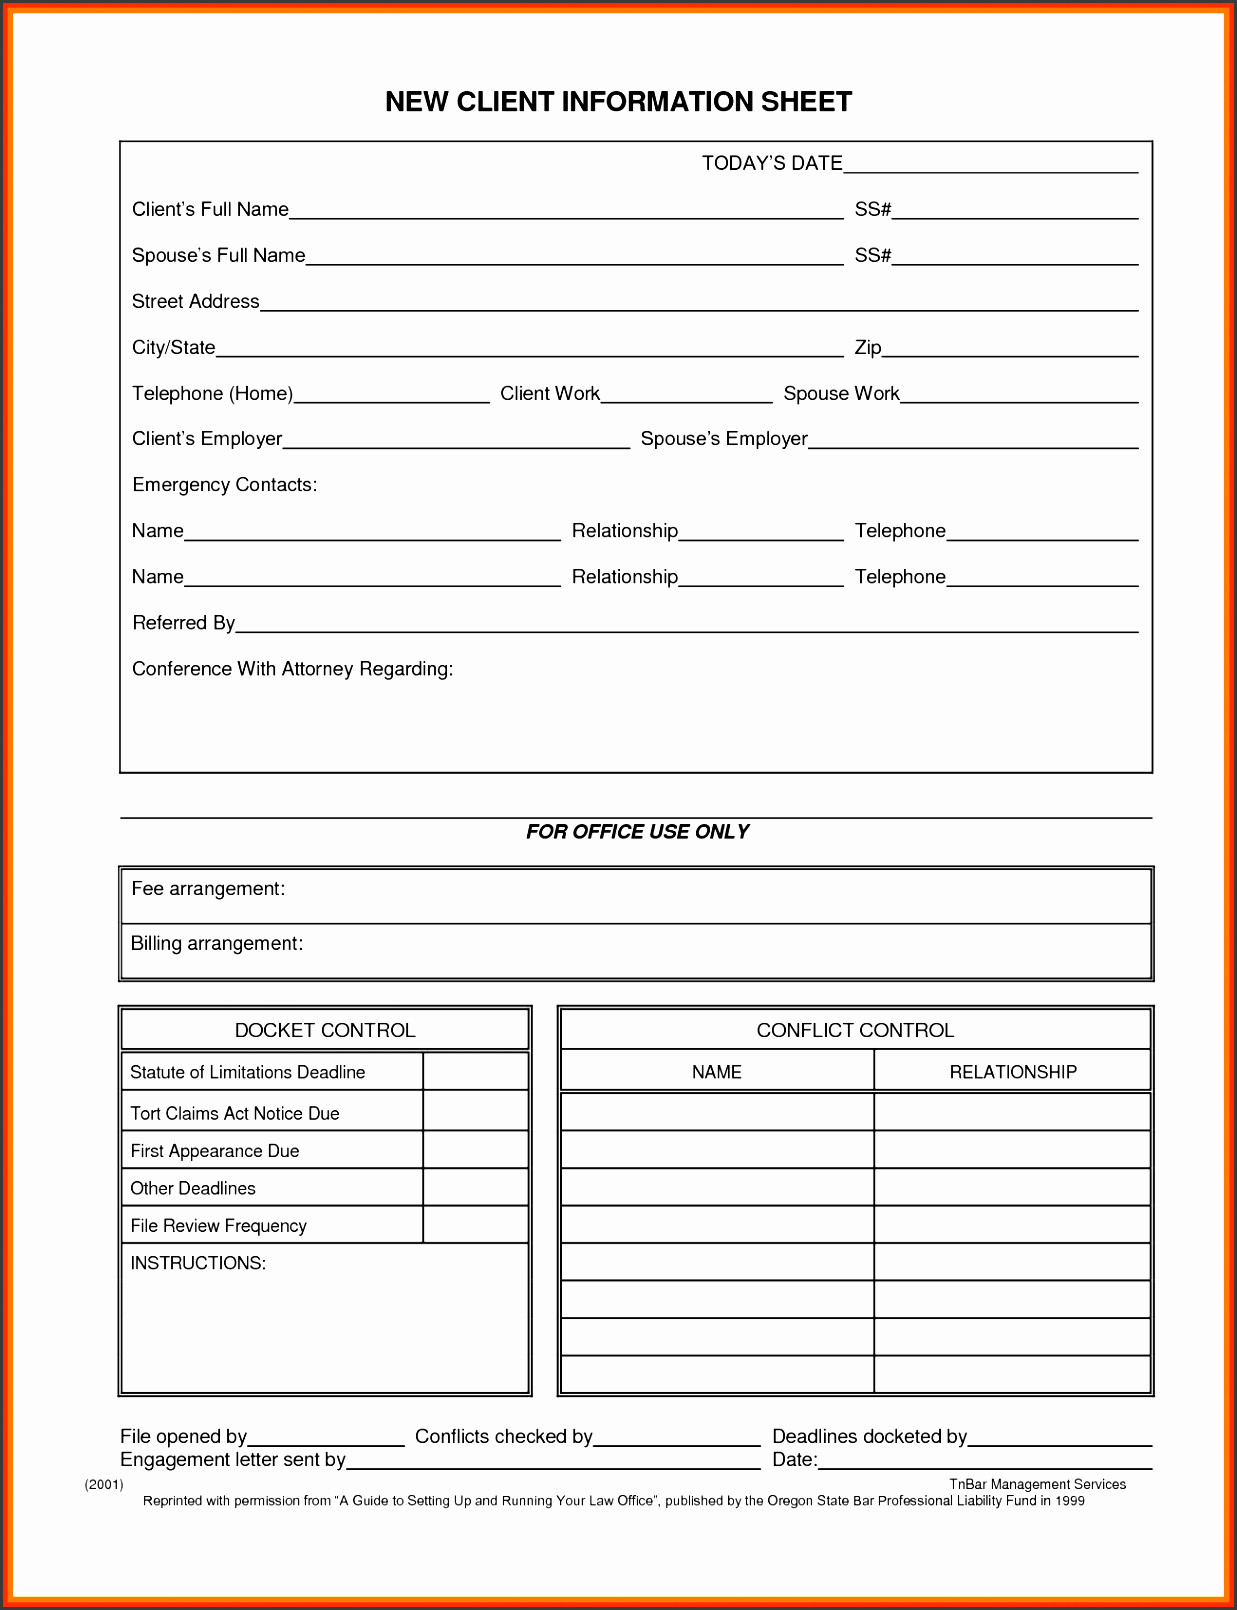 5 Customer Information Sheet Template SampleTemplatess